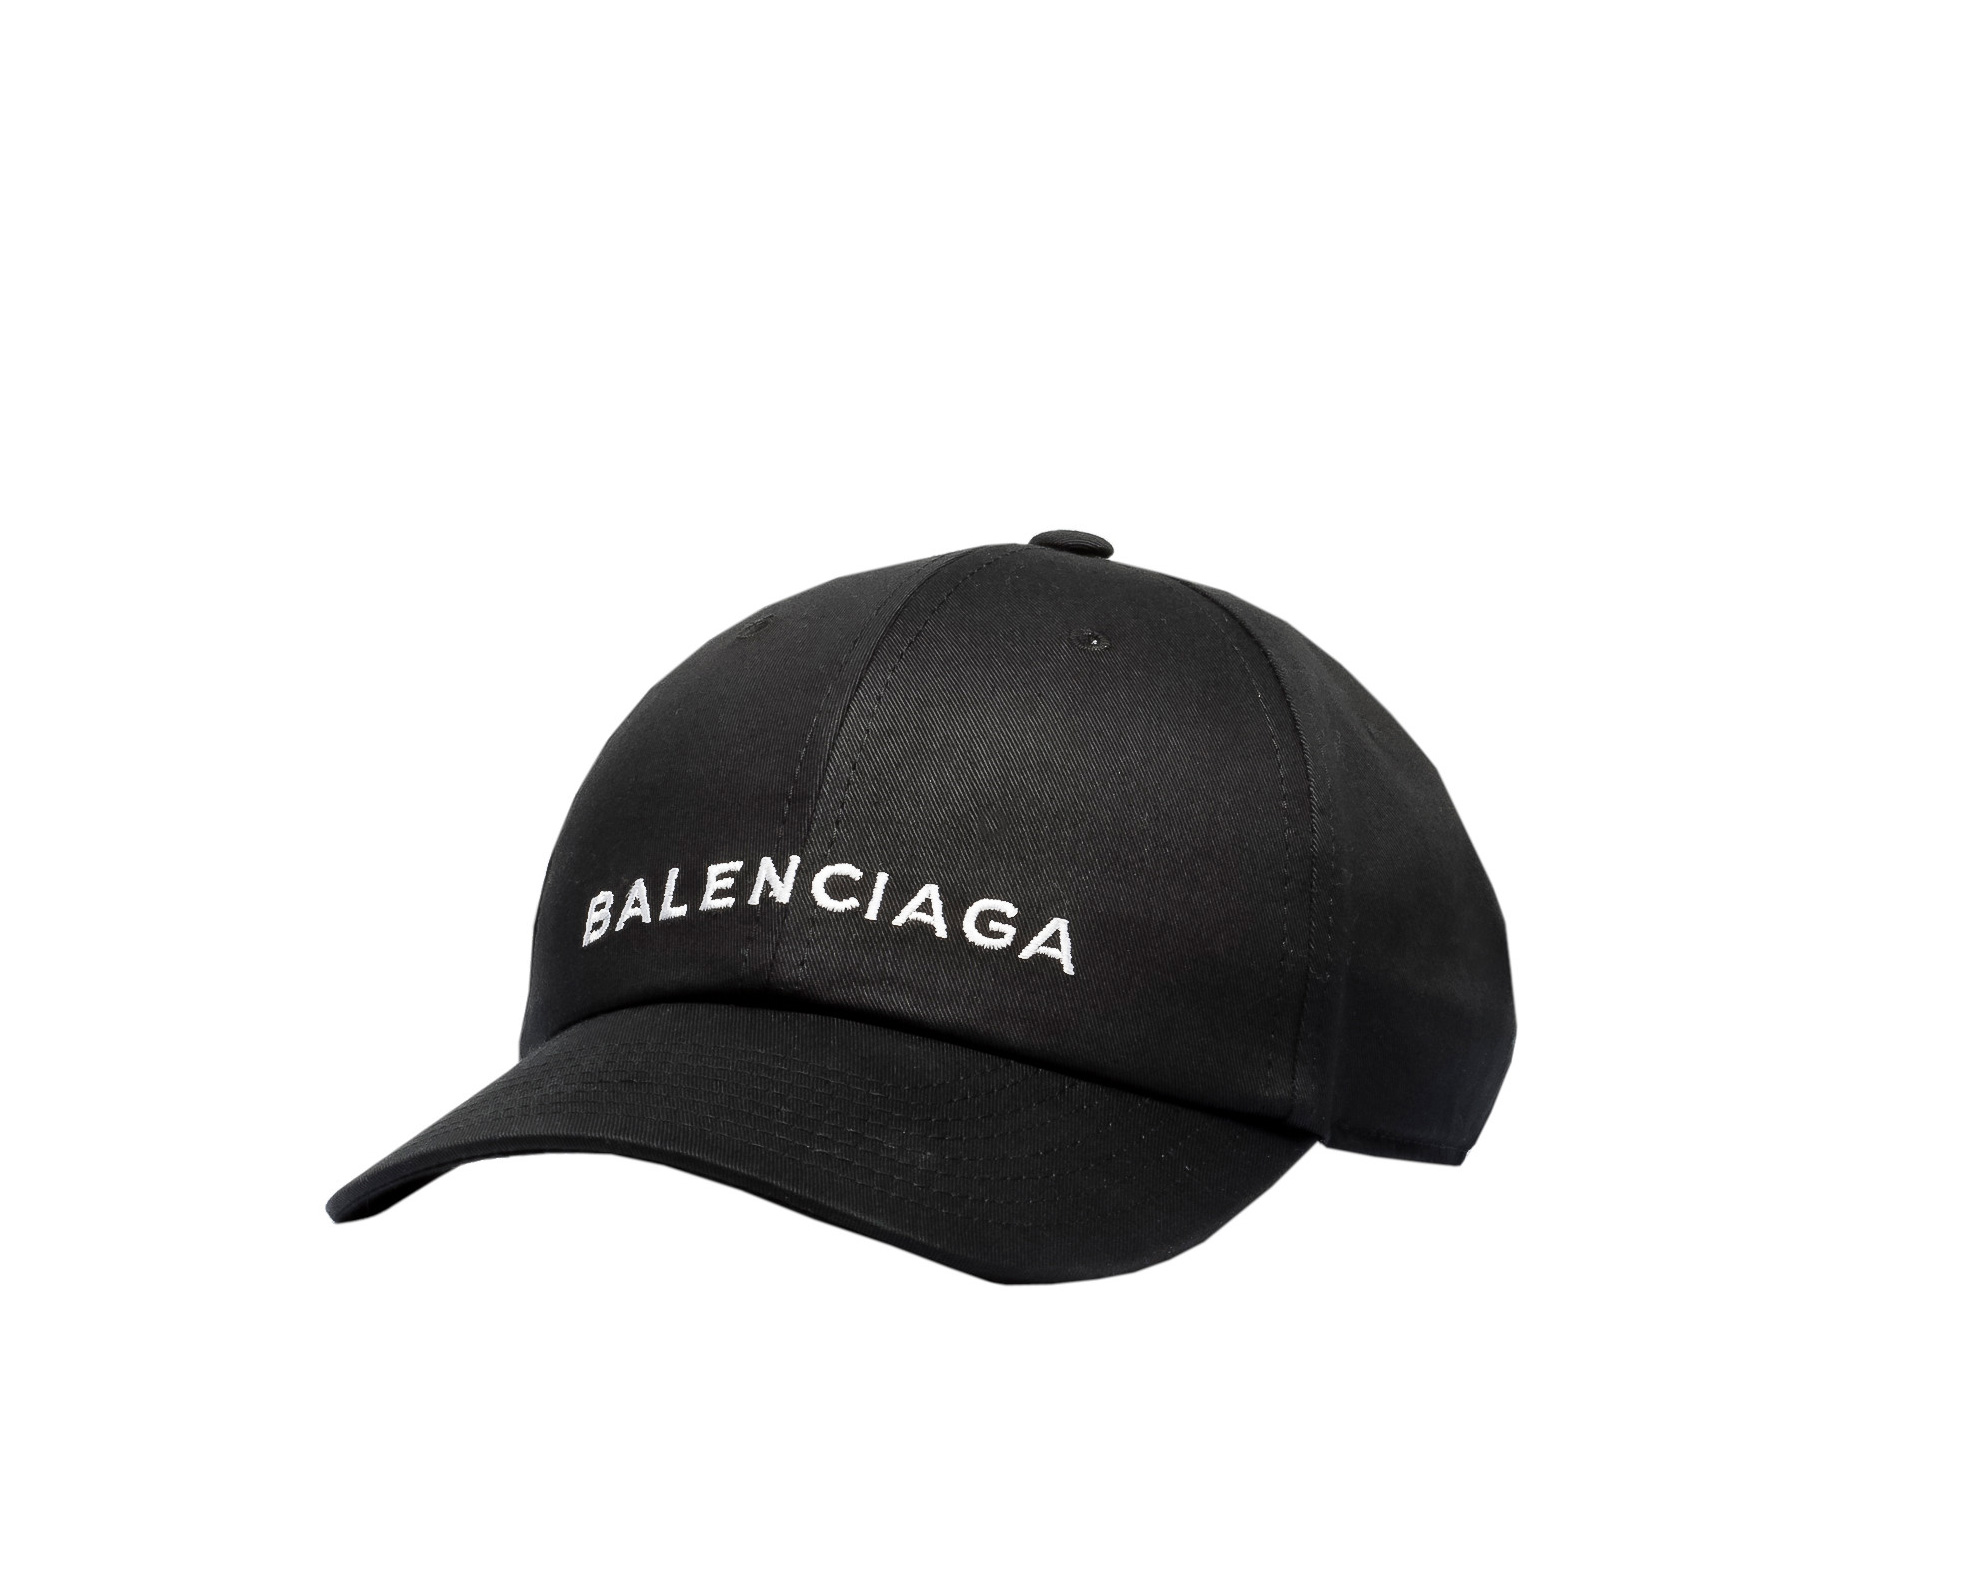 price of balenciaga hat